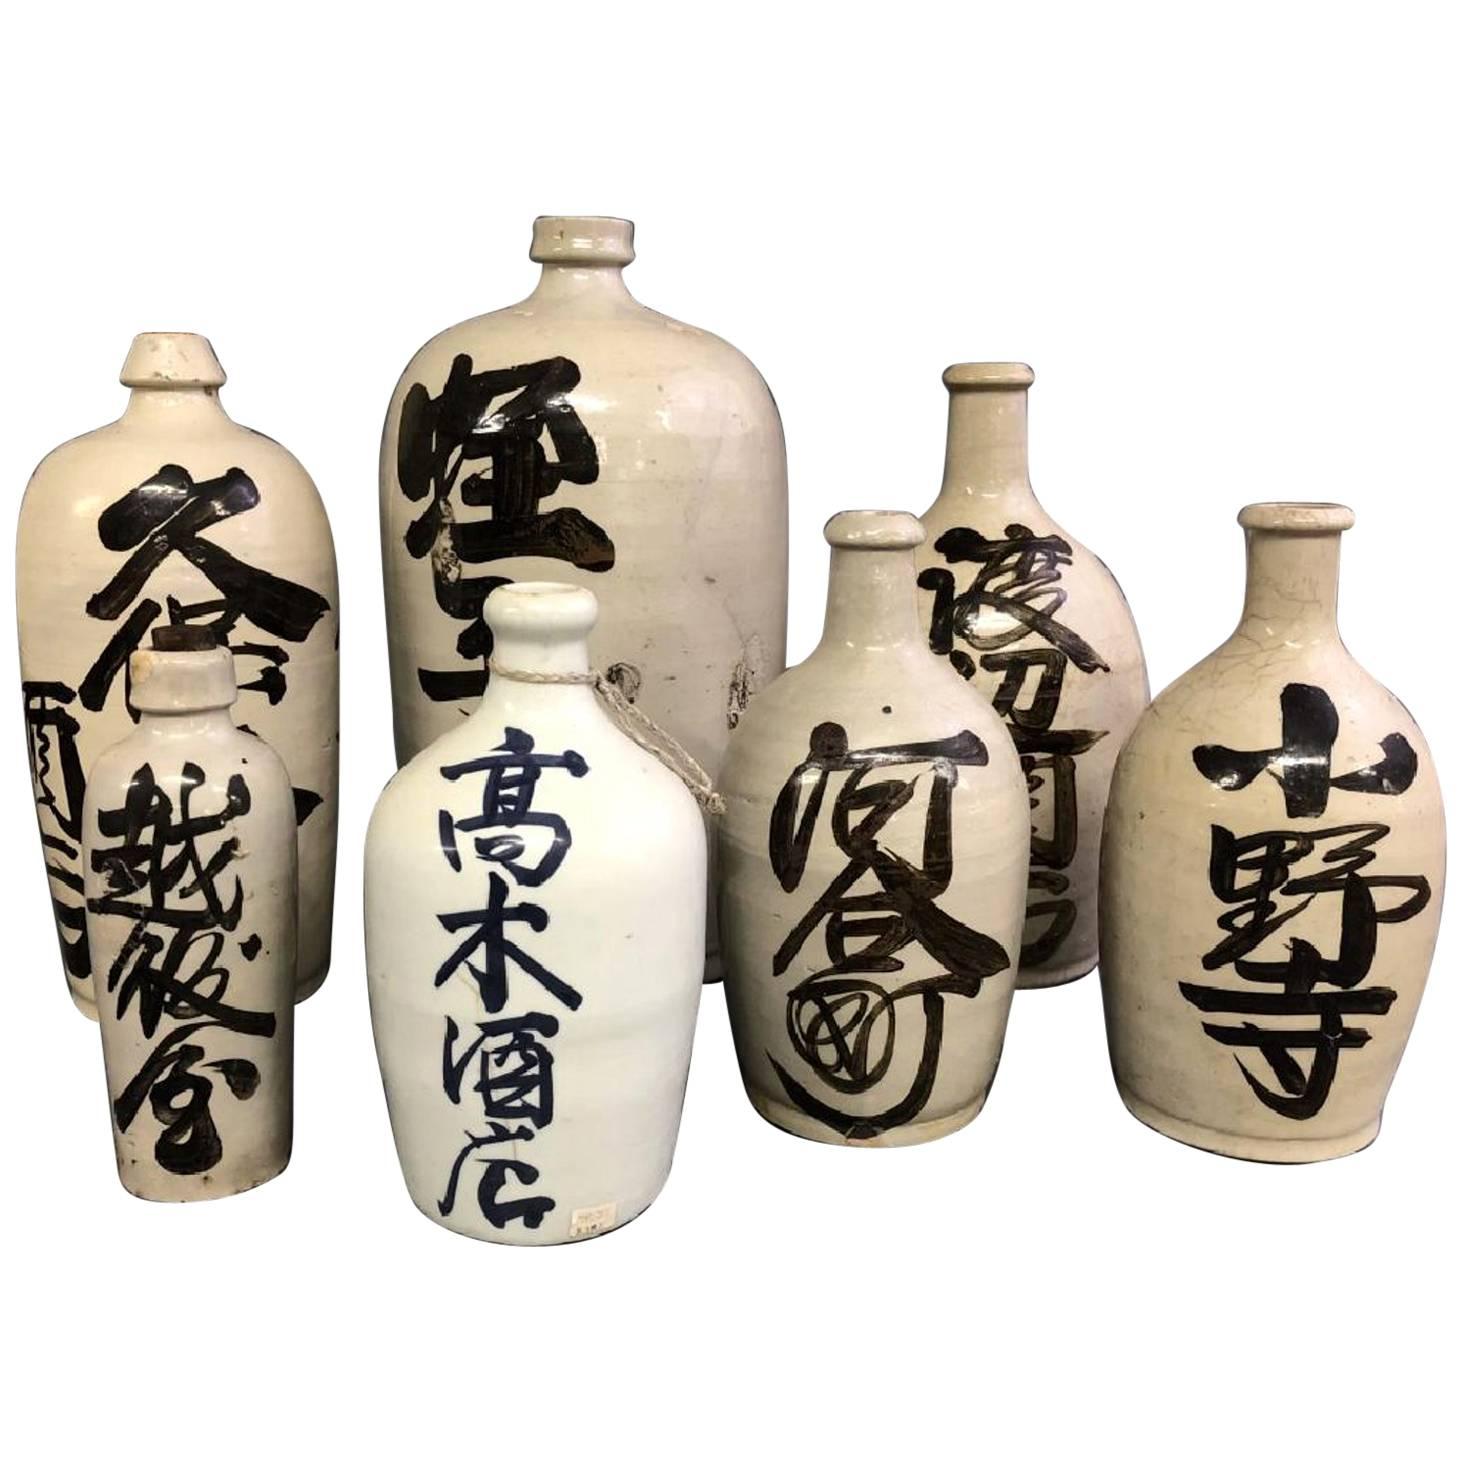 Collection of Antique Japanese Sake Bottles